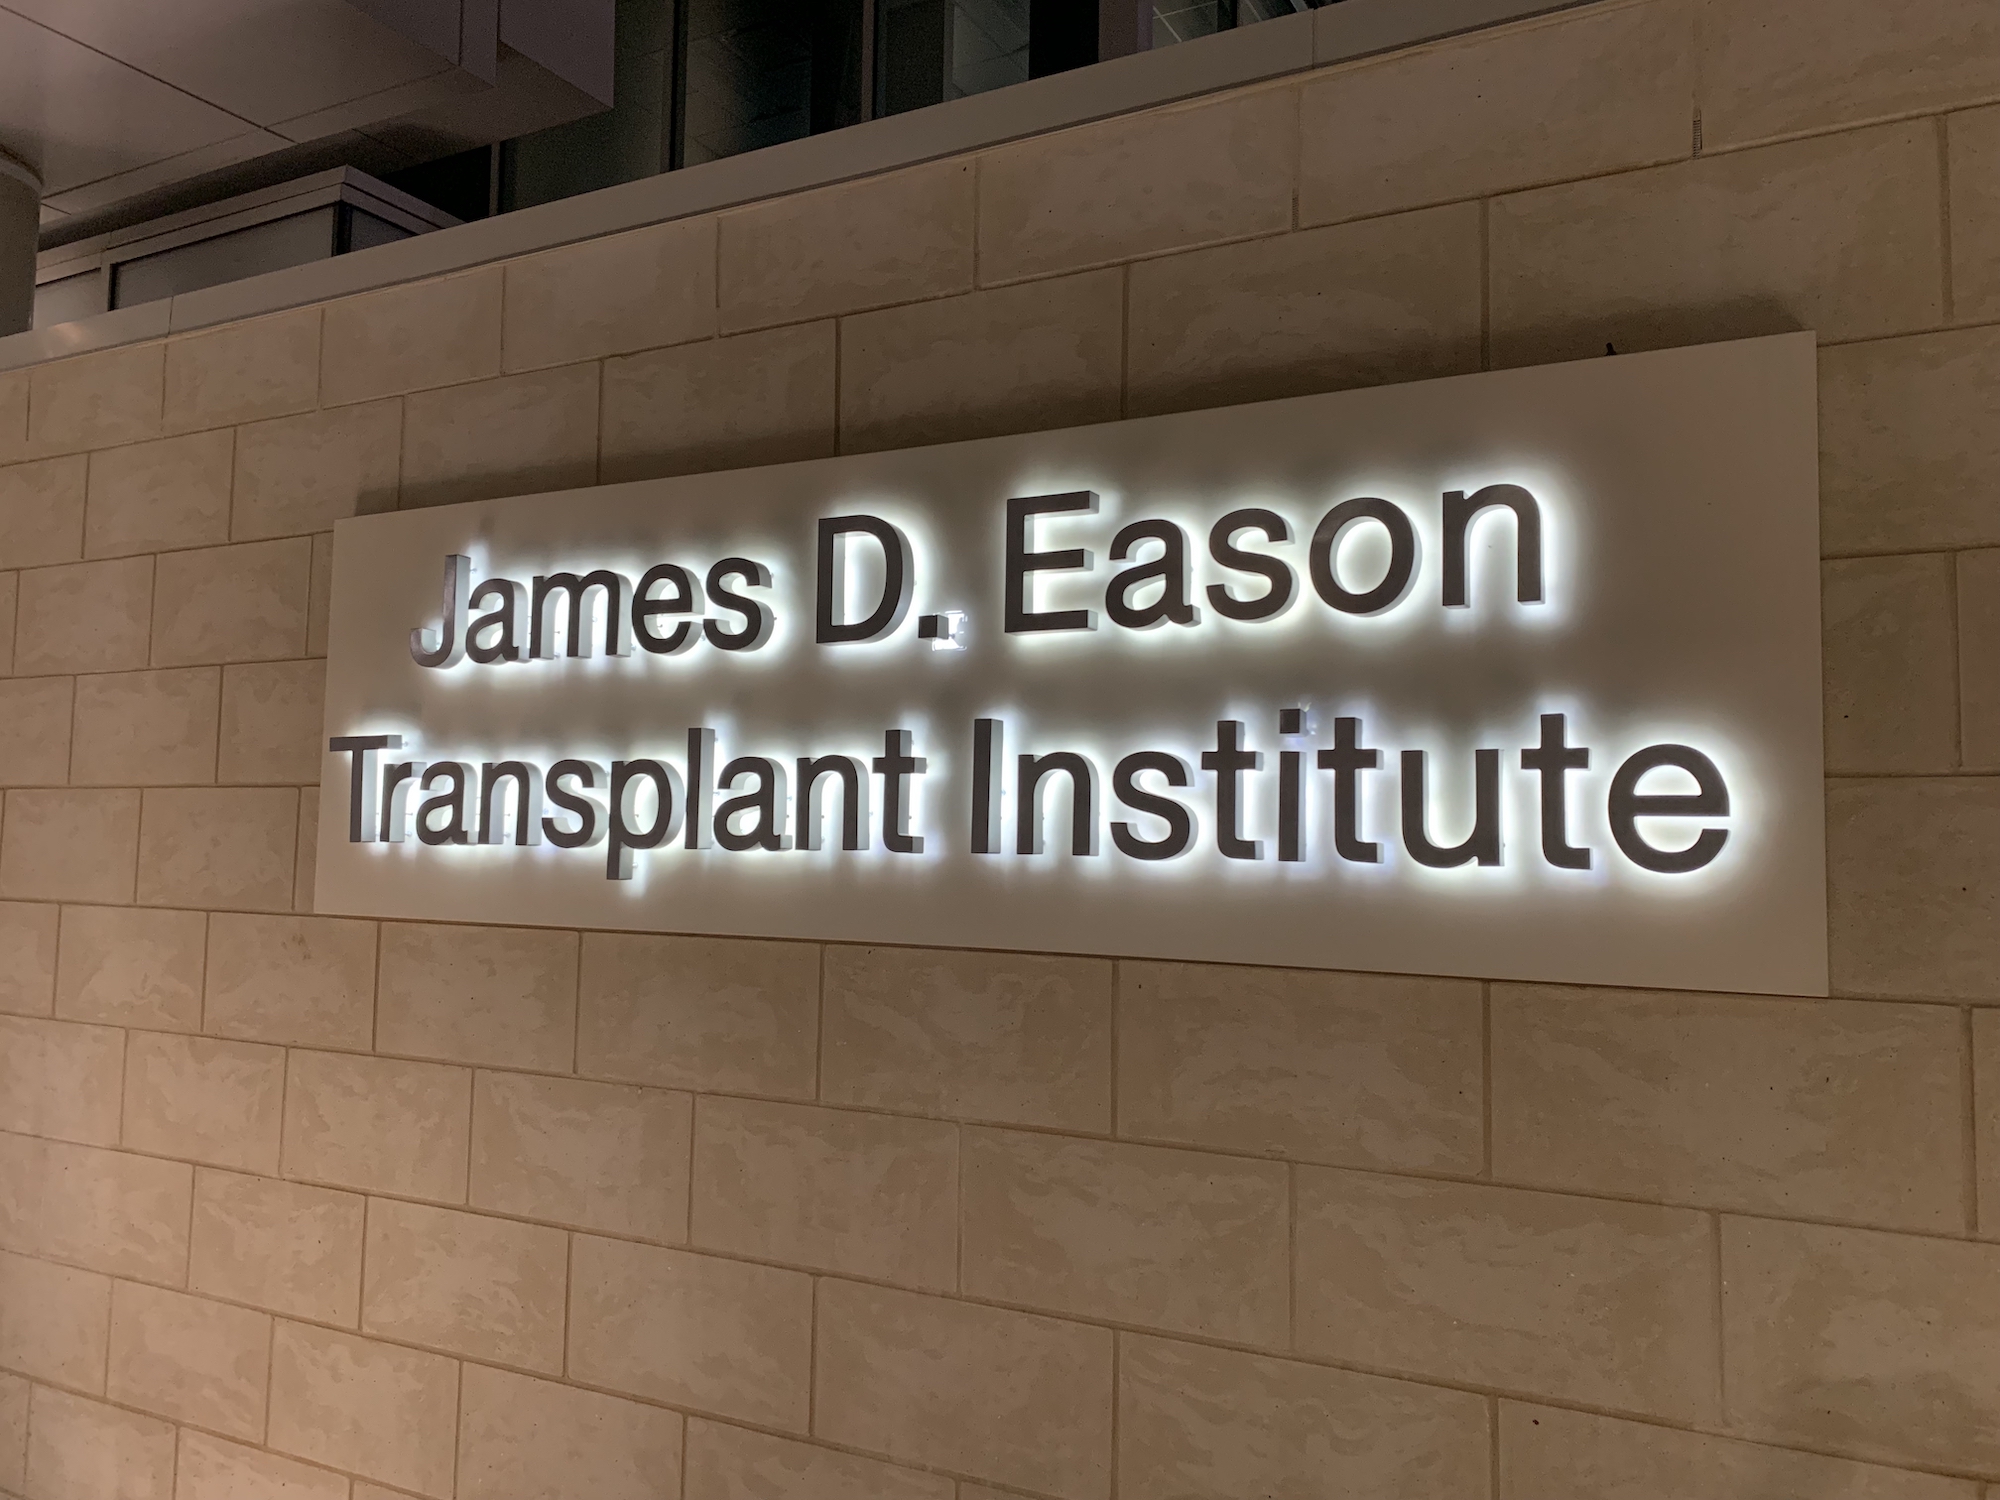 James D. Eason Transplant Institute lit signage